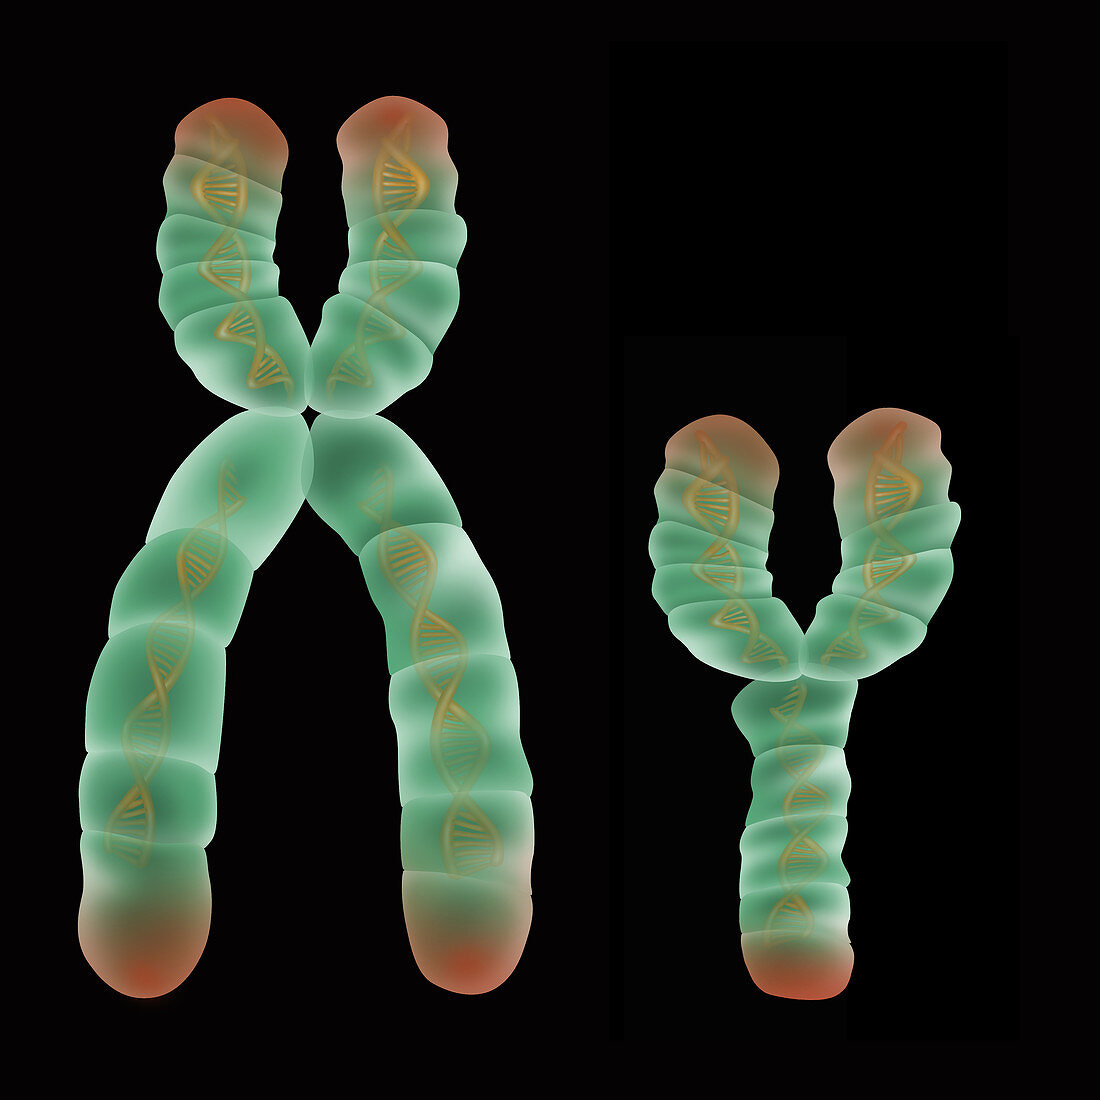 XY Chromosome,Illustration